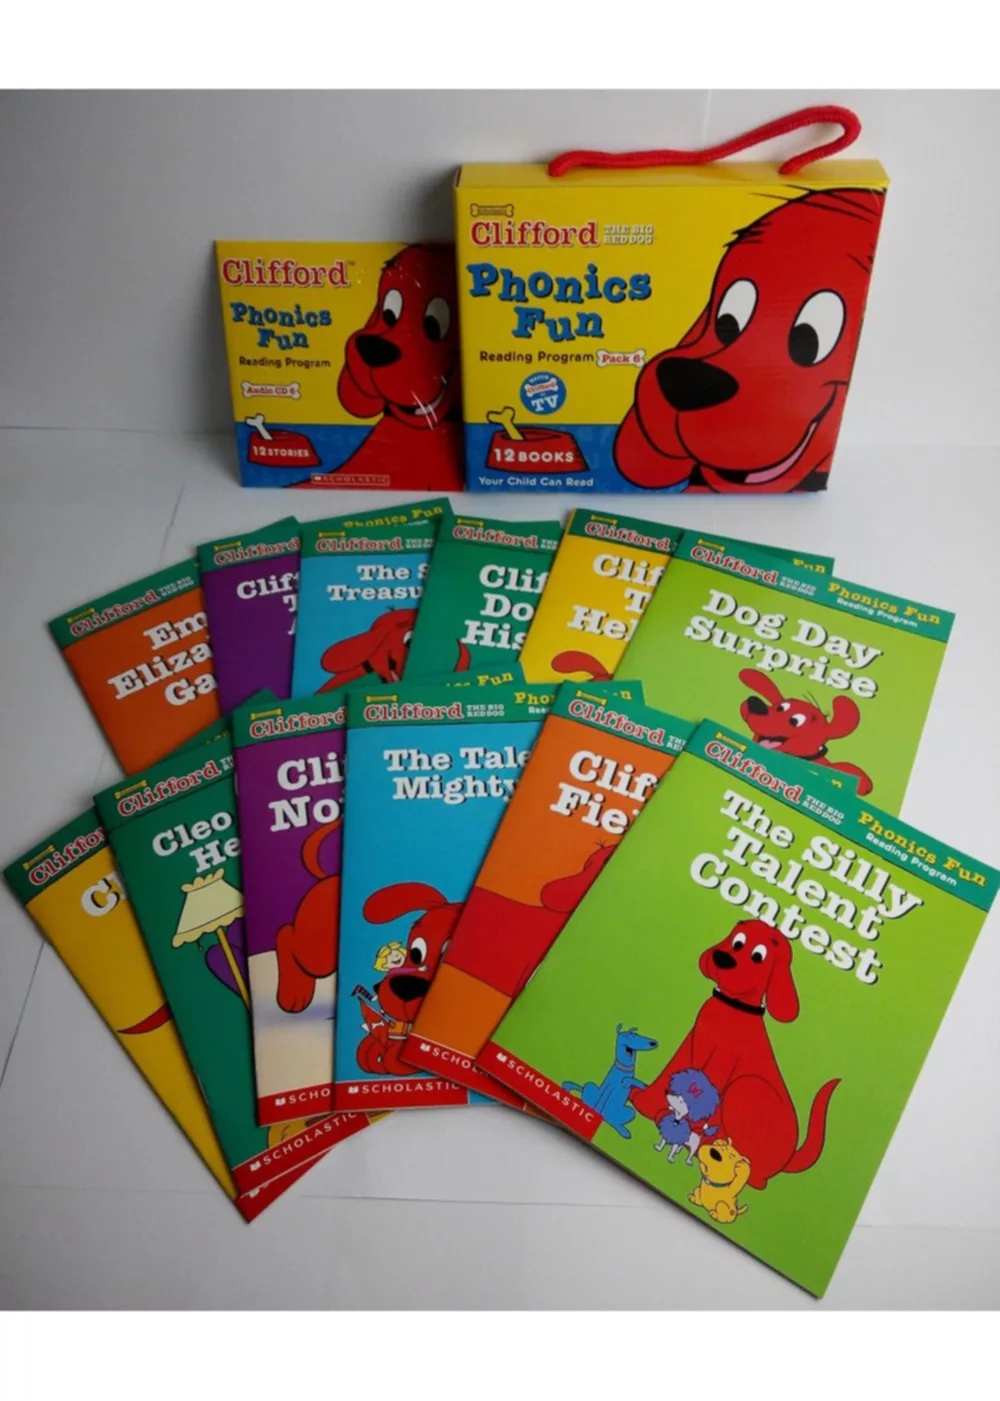 Clifford Phonics Fun: Reading Program Pack 6 (12 Books+CD)